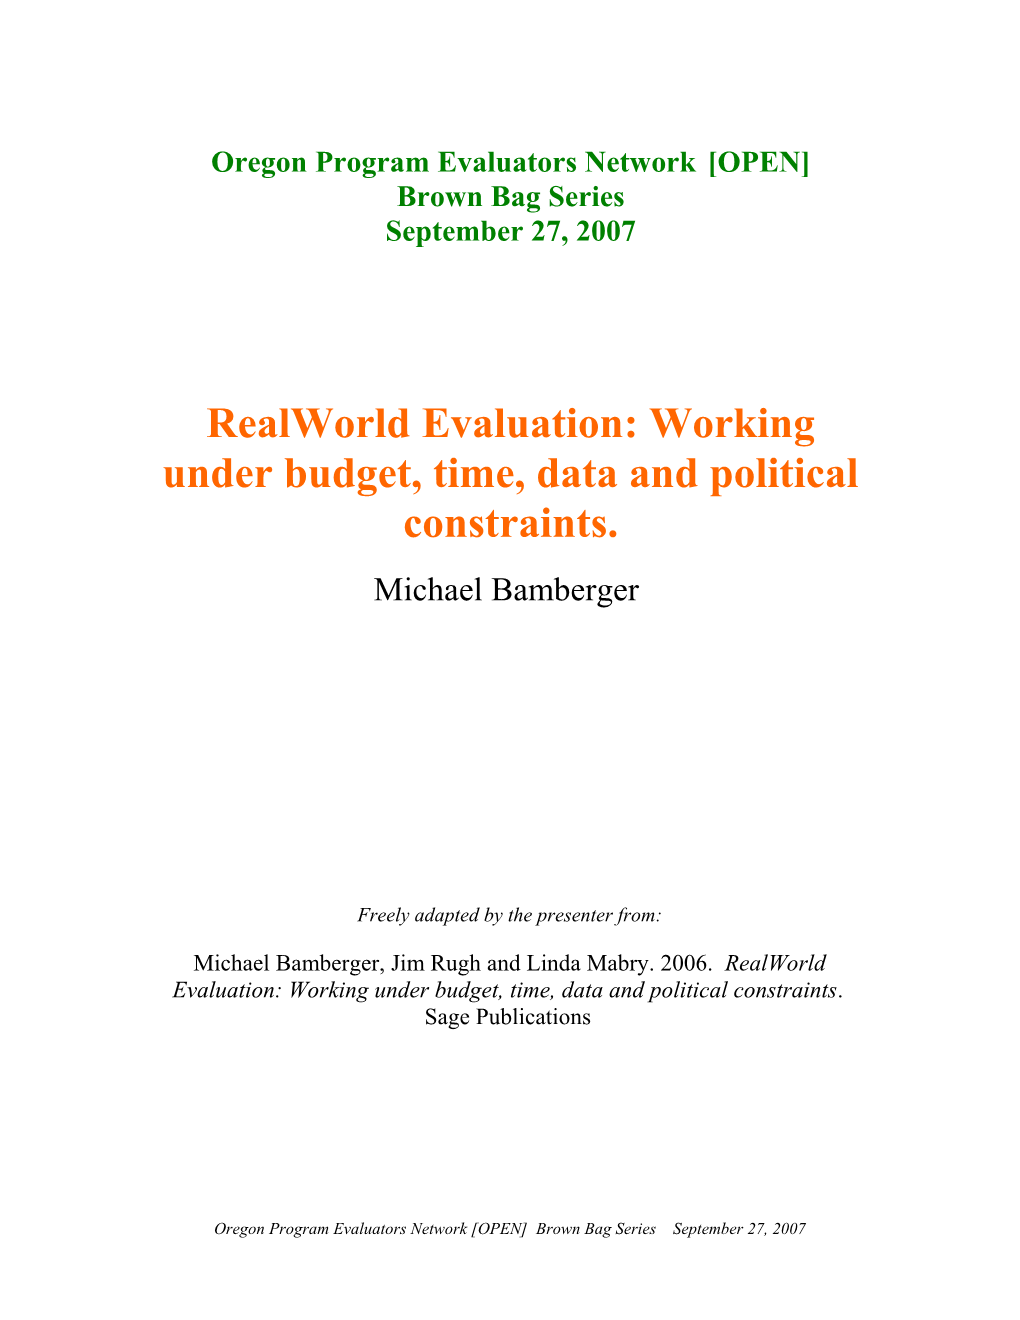 Oregon Program Evaluators Network OPEN